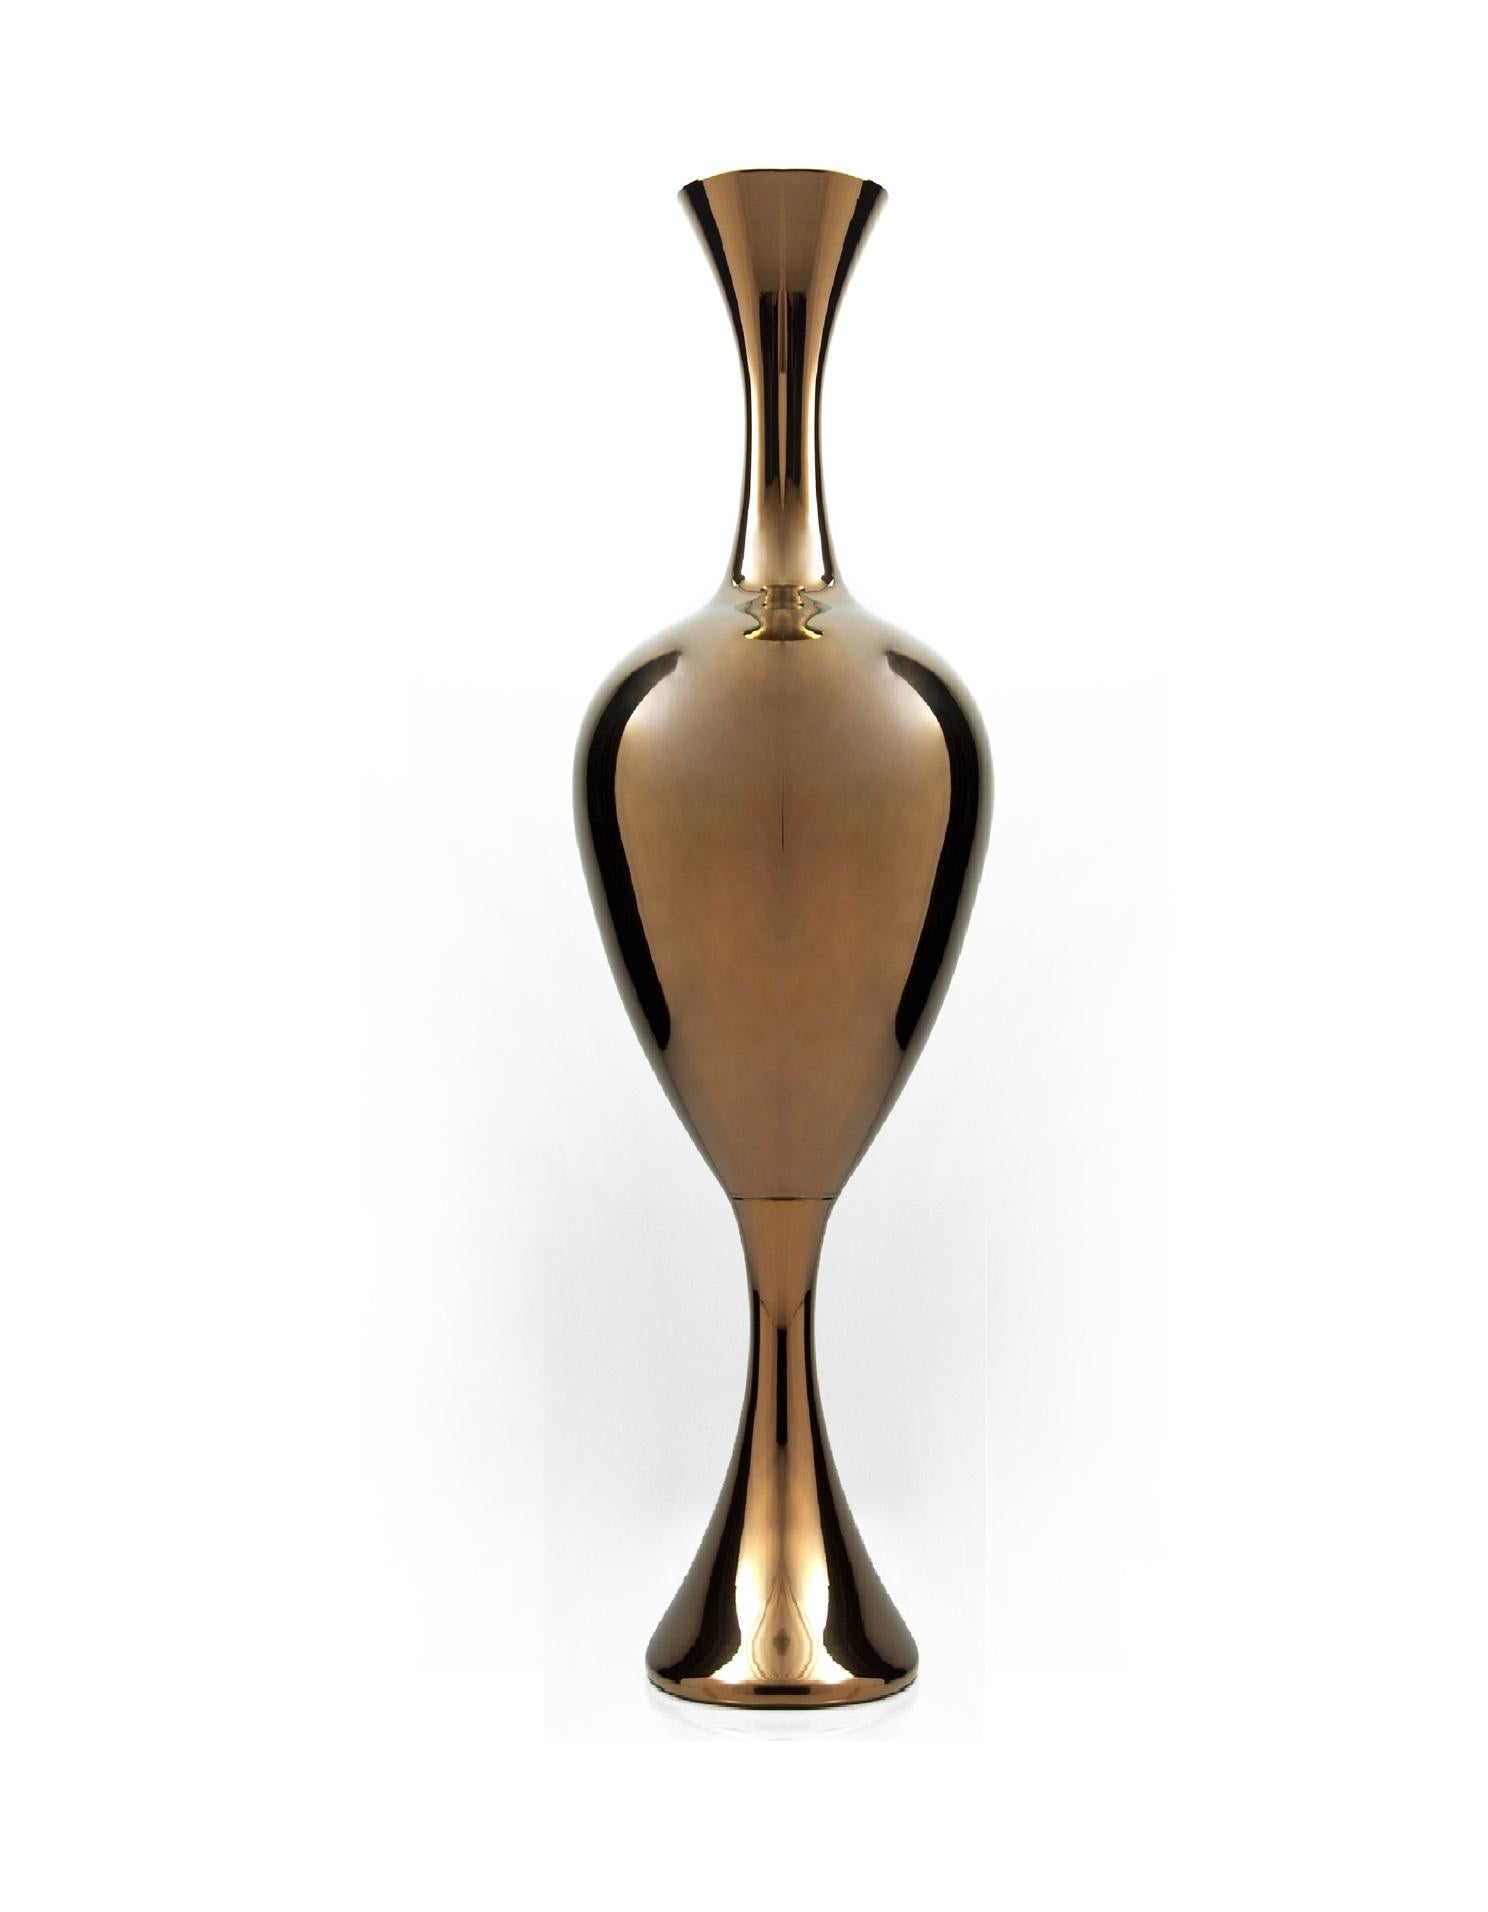 Ceramic vase handcrafted in bronze
EVE-L - code VS033. Measures: Height 200.0 cm., diameter. 60.0 cm.